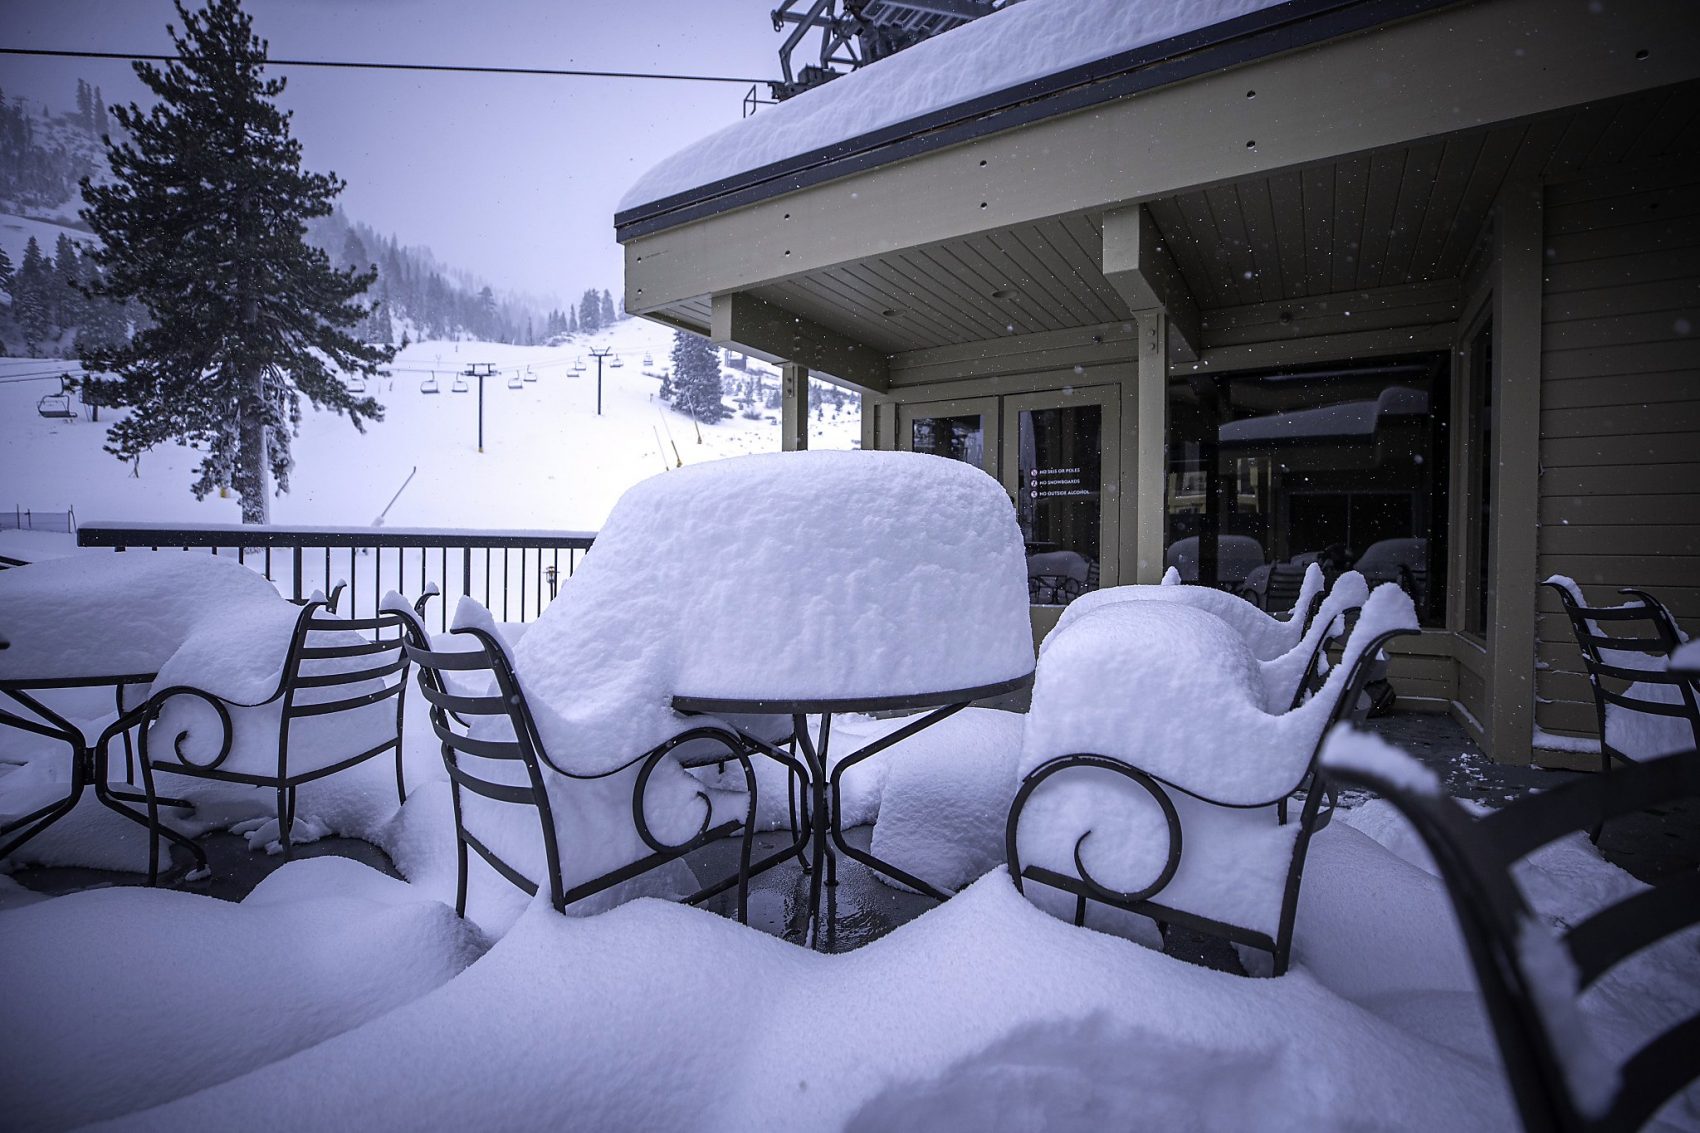 Feet of snow on tables, california, 